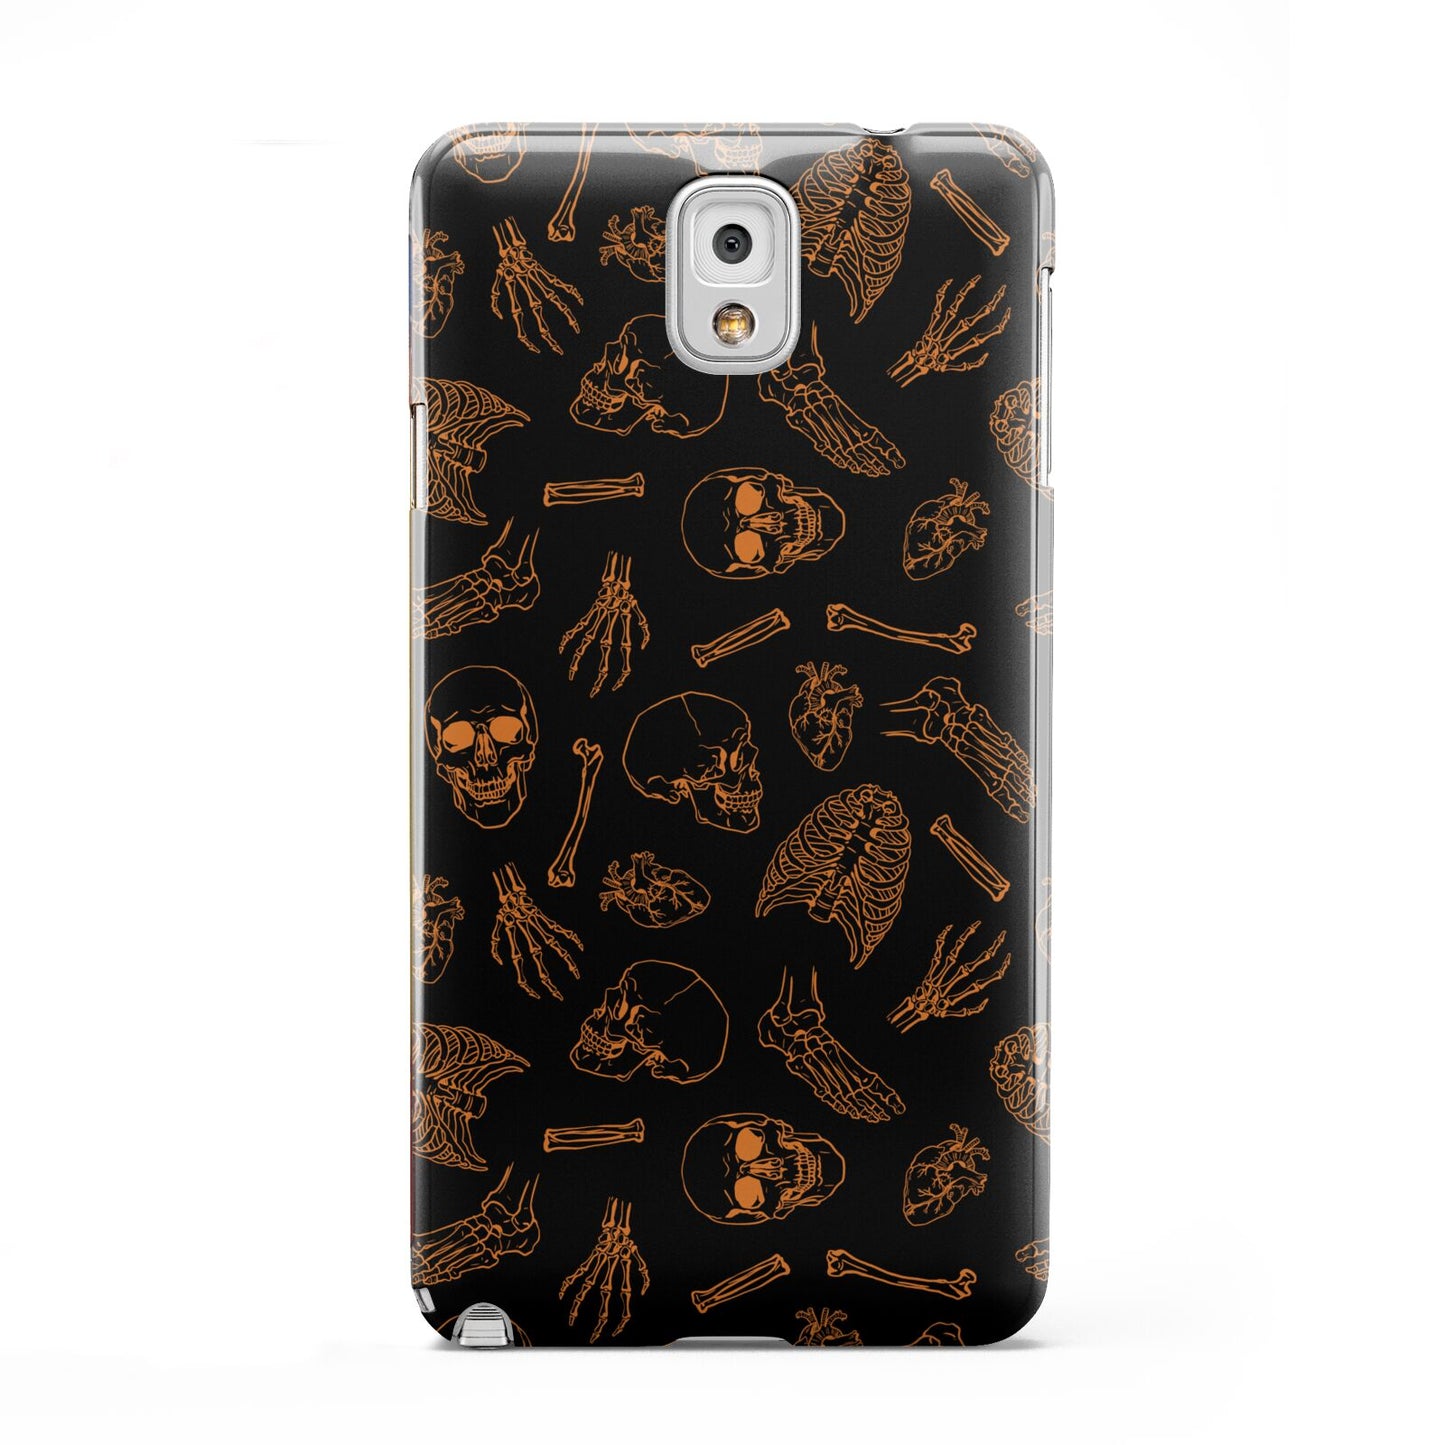 Orange Skeleton Illustrations Samsung Galaxy Note 3 Case